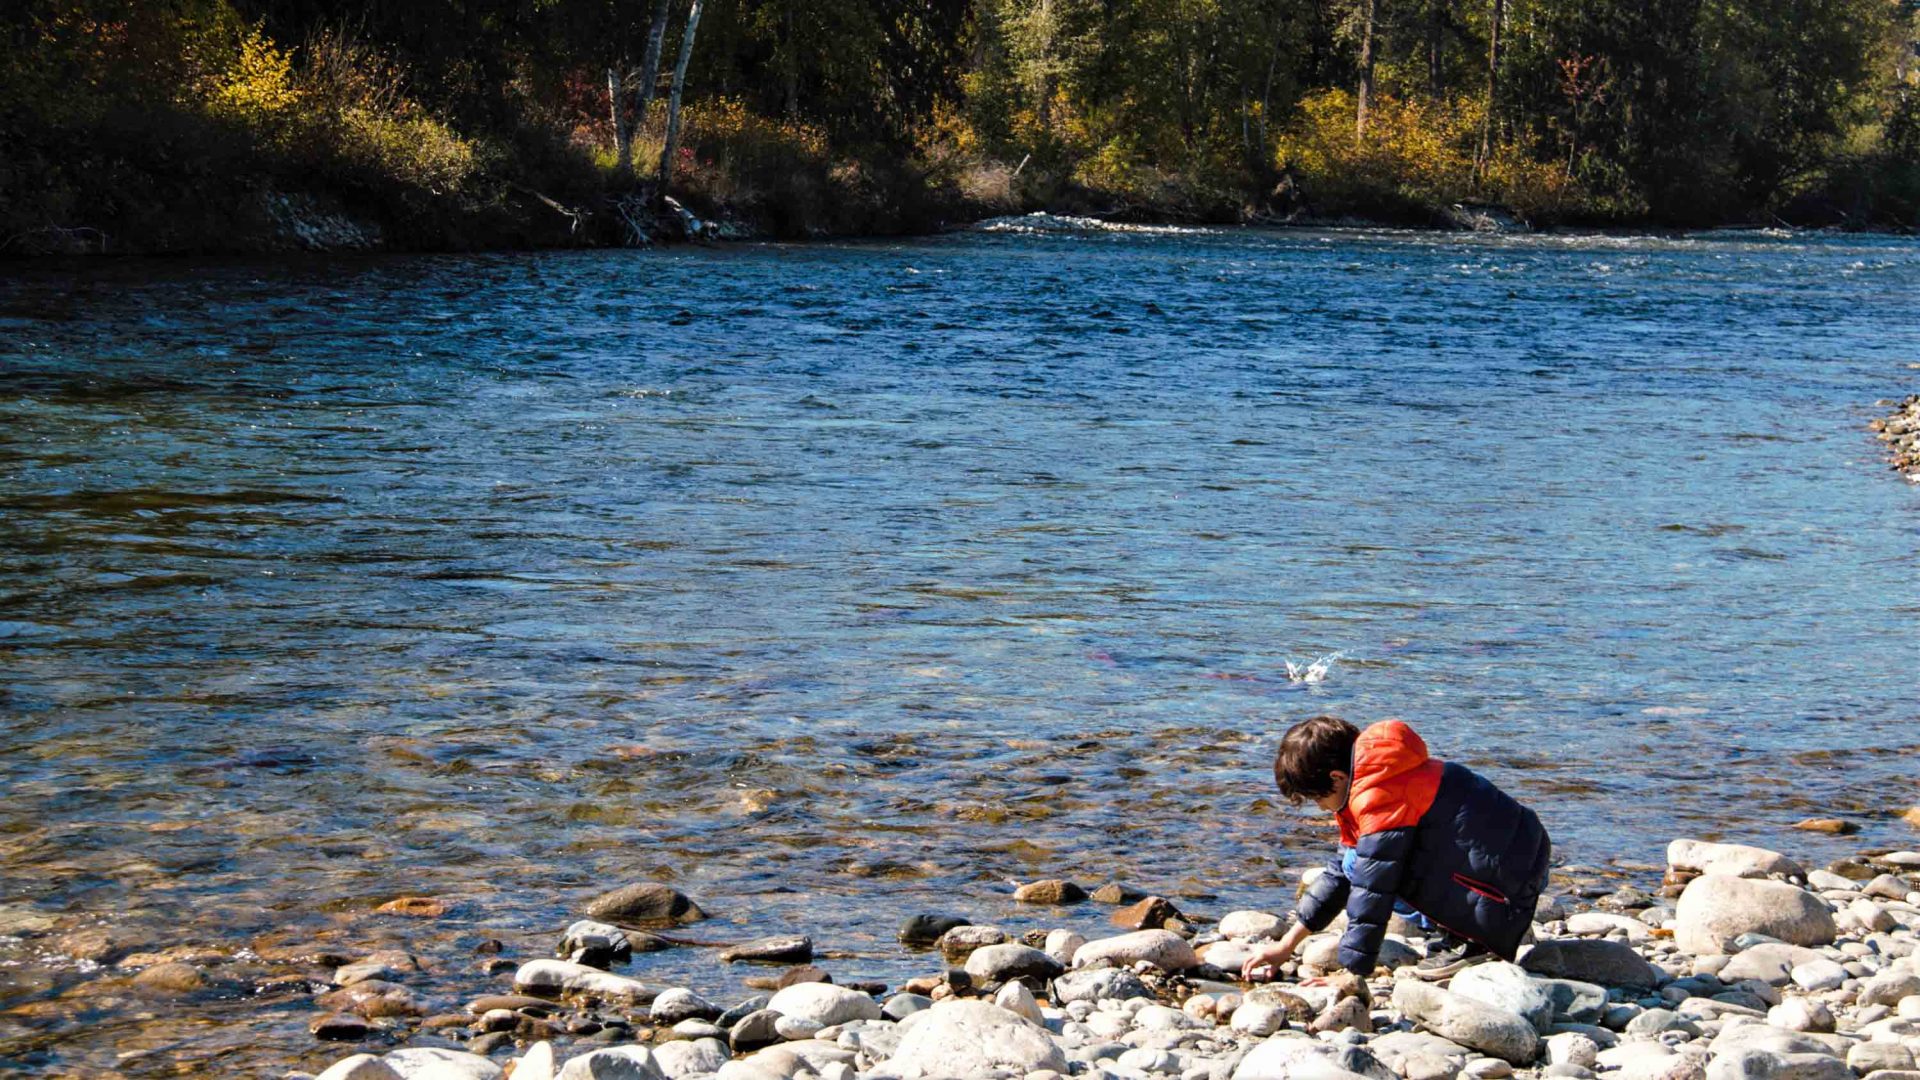 A child plays on the banks while sockeye salmon make their way upstream.